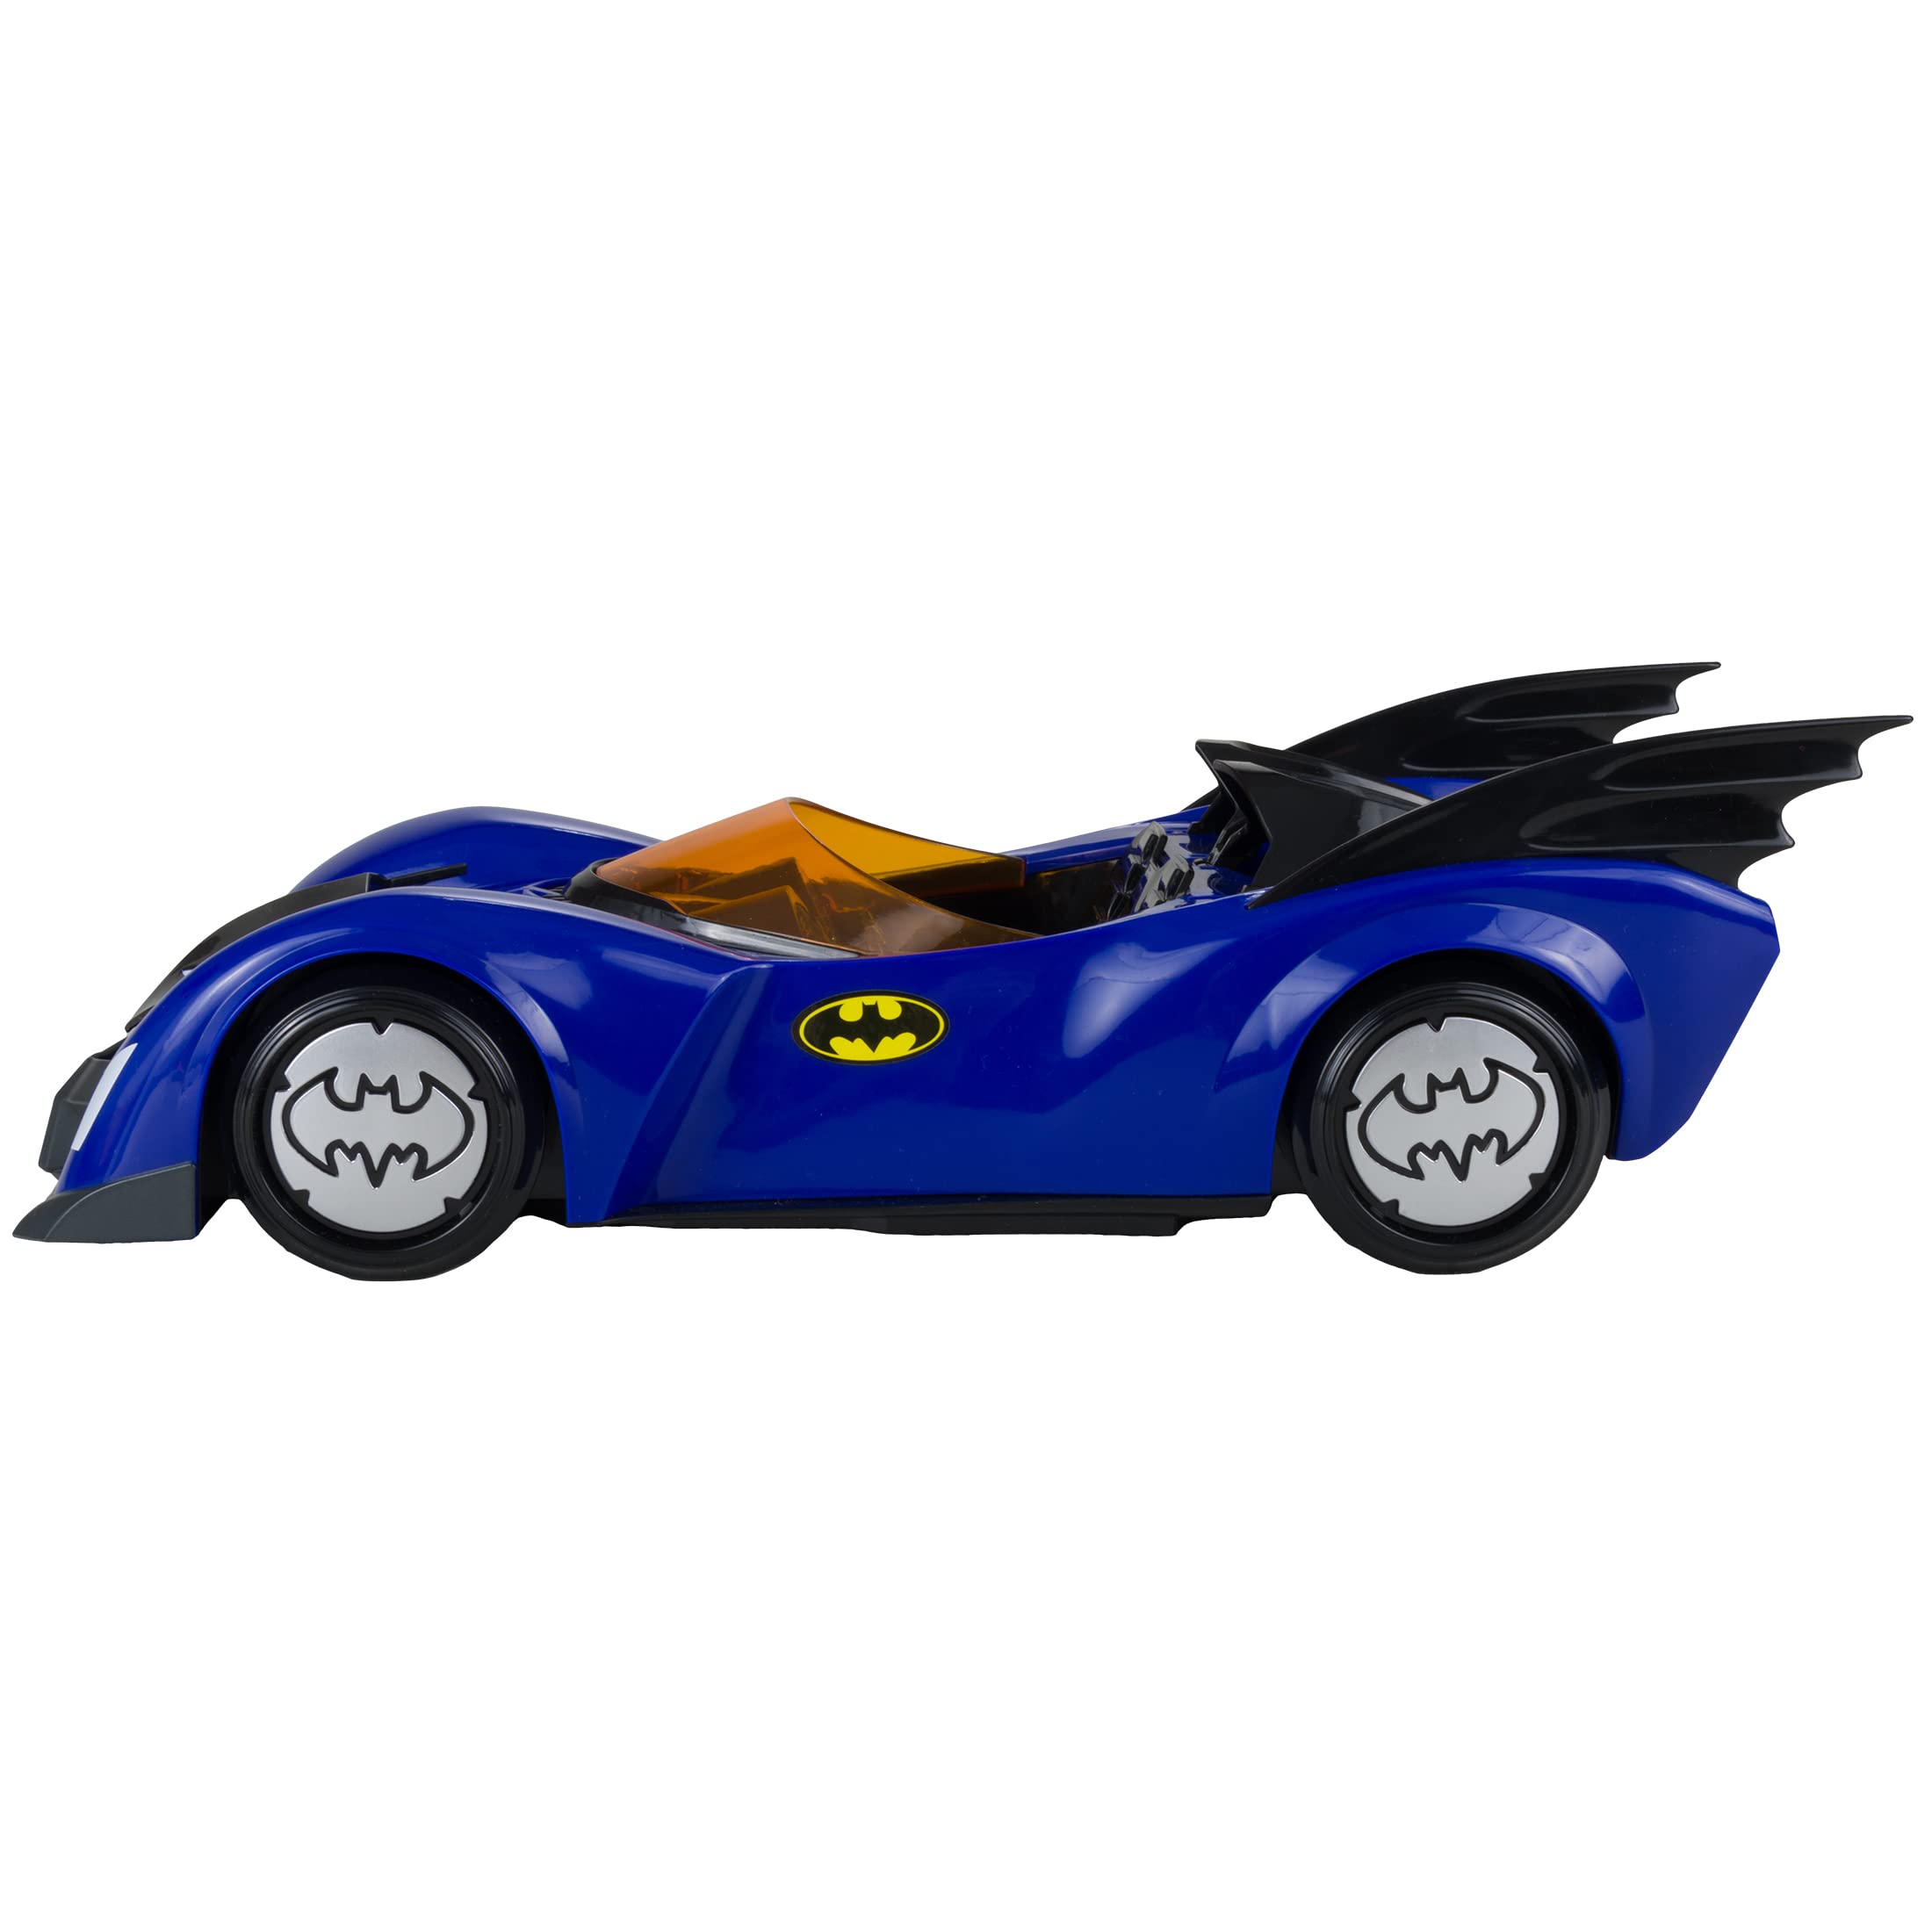 McFarlane Toys - DC Super Powers The Batmobile Vehicle